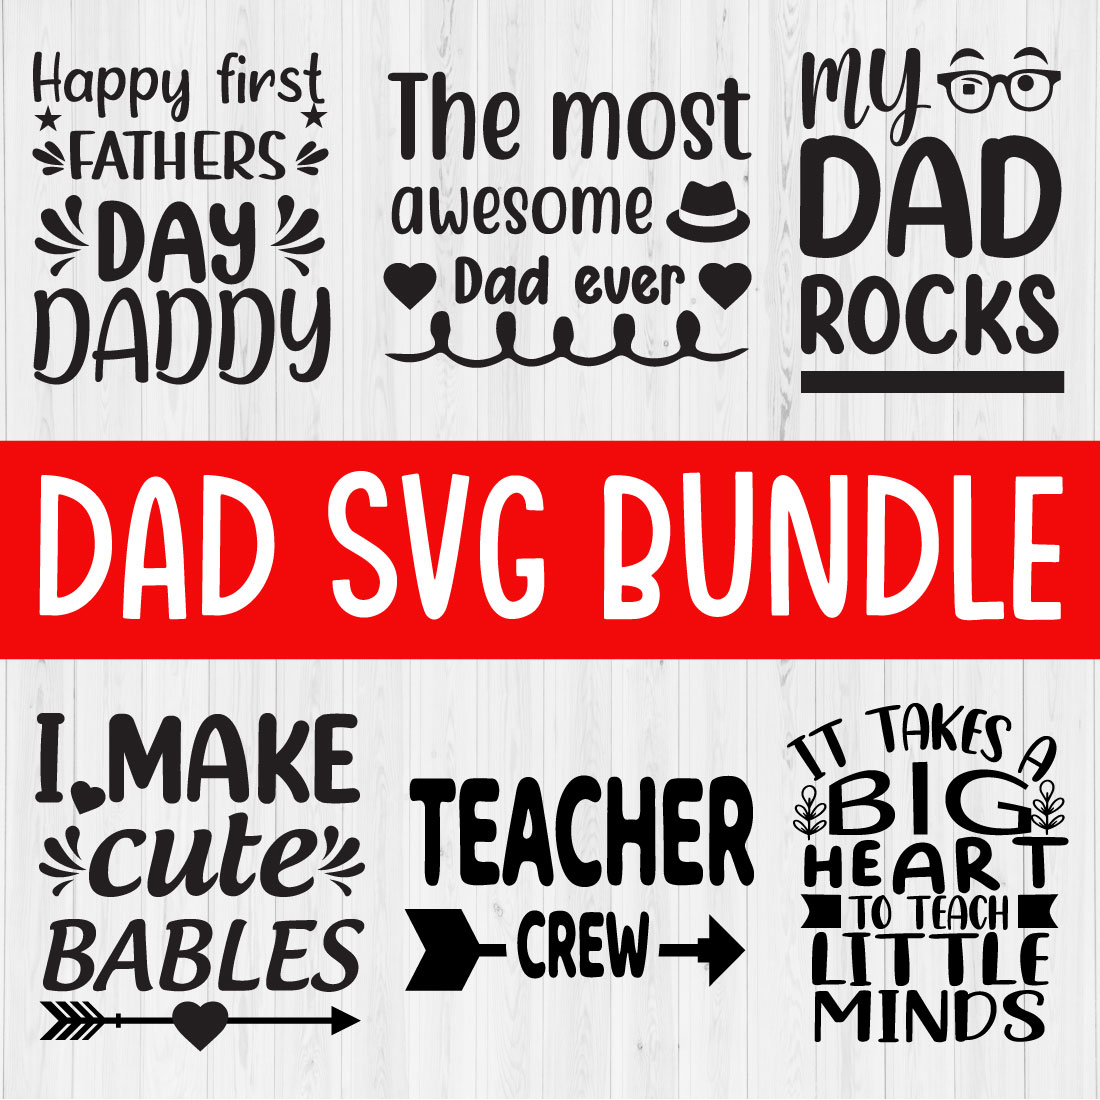 Dad Svg T-shirt Design Bundle Vol10 cover image.